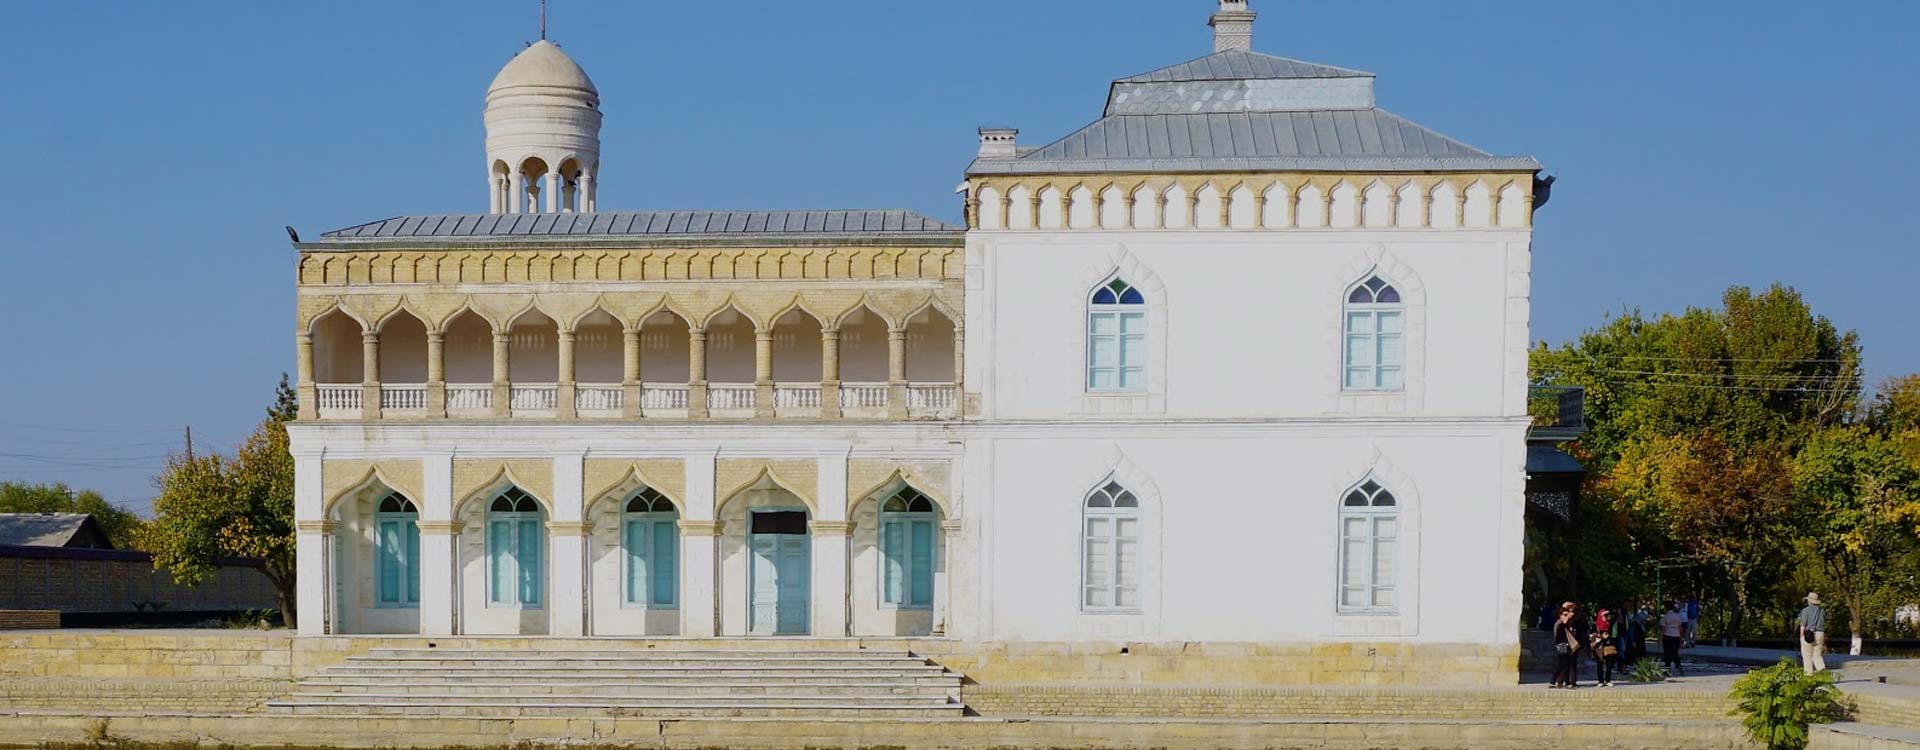 Sitorai-Mohi Hosa Palace